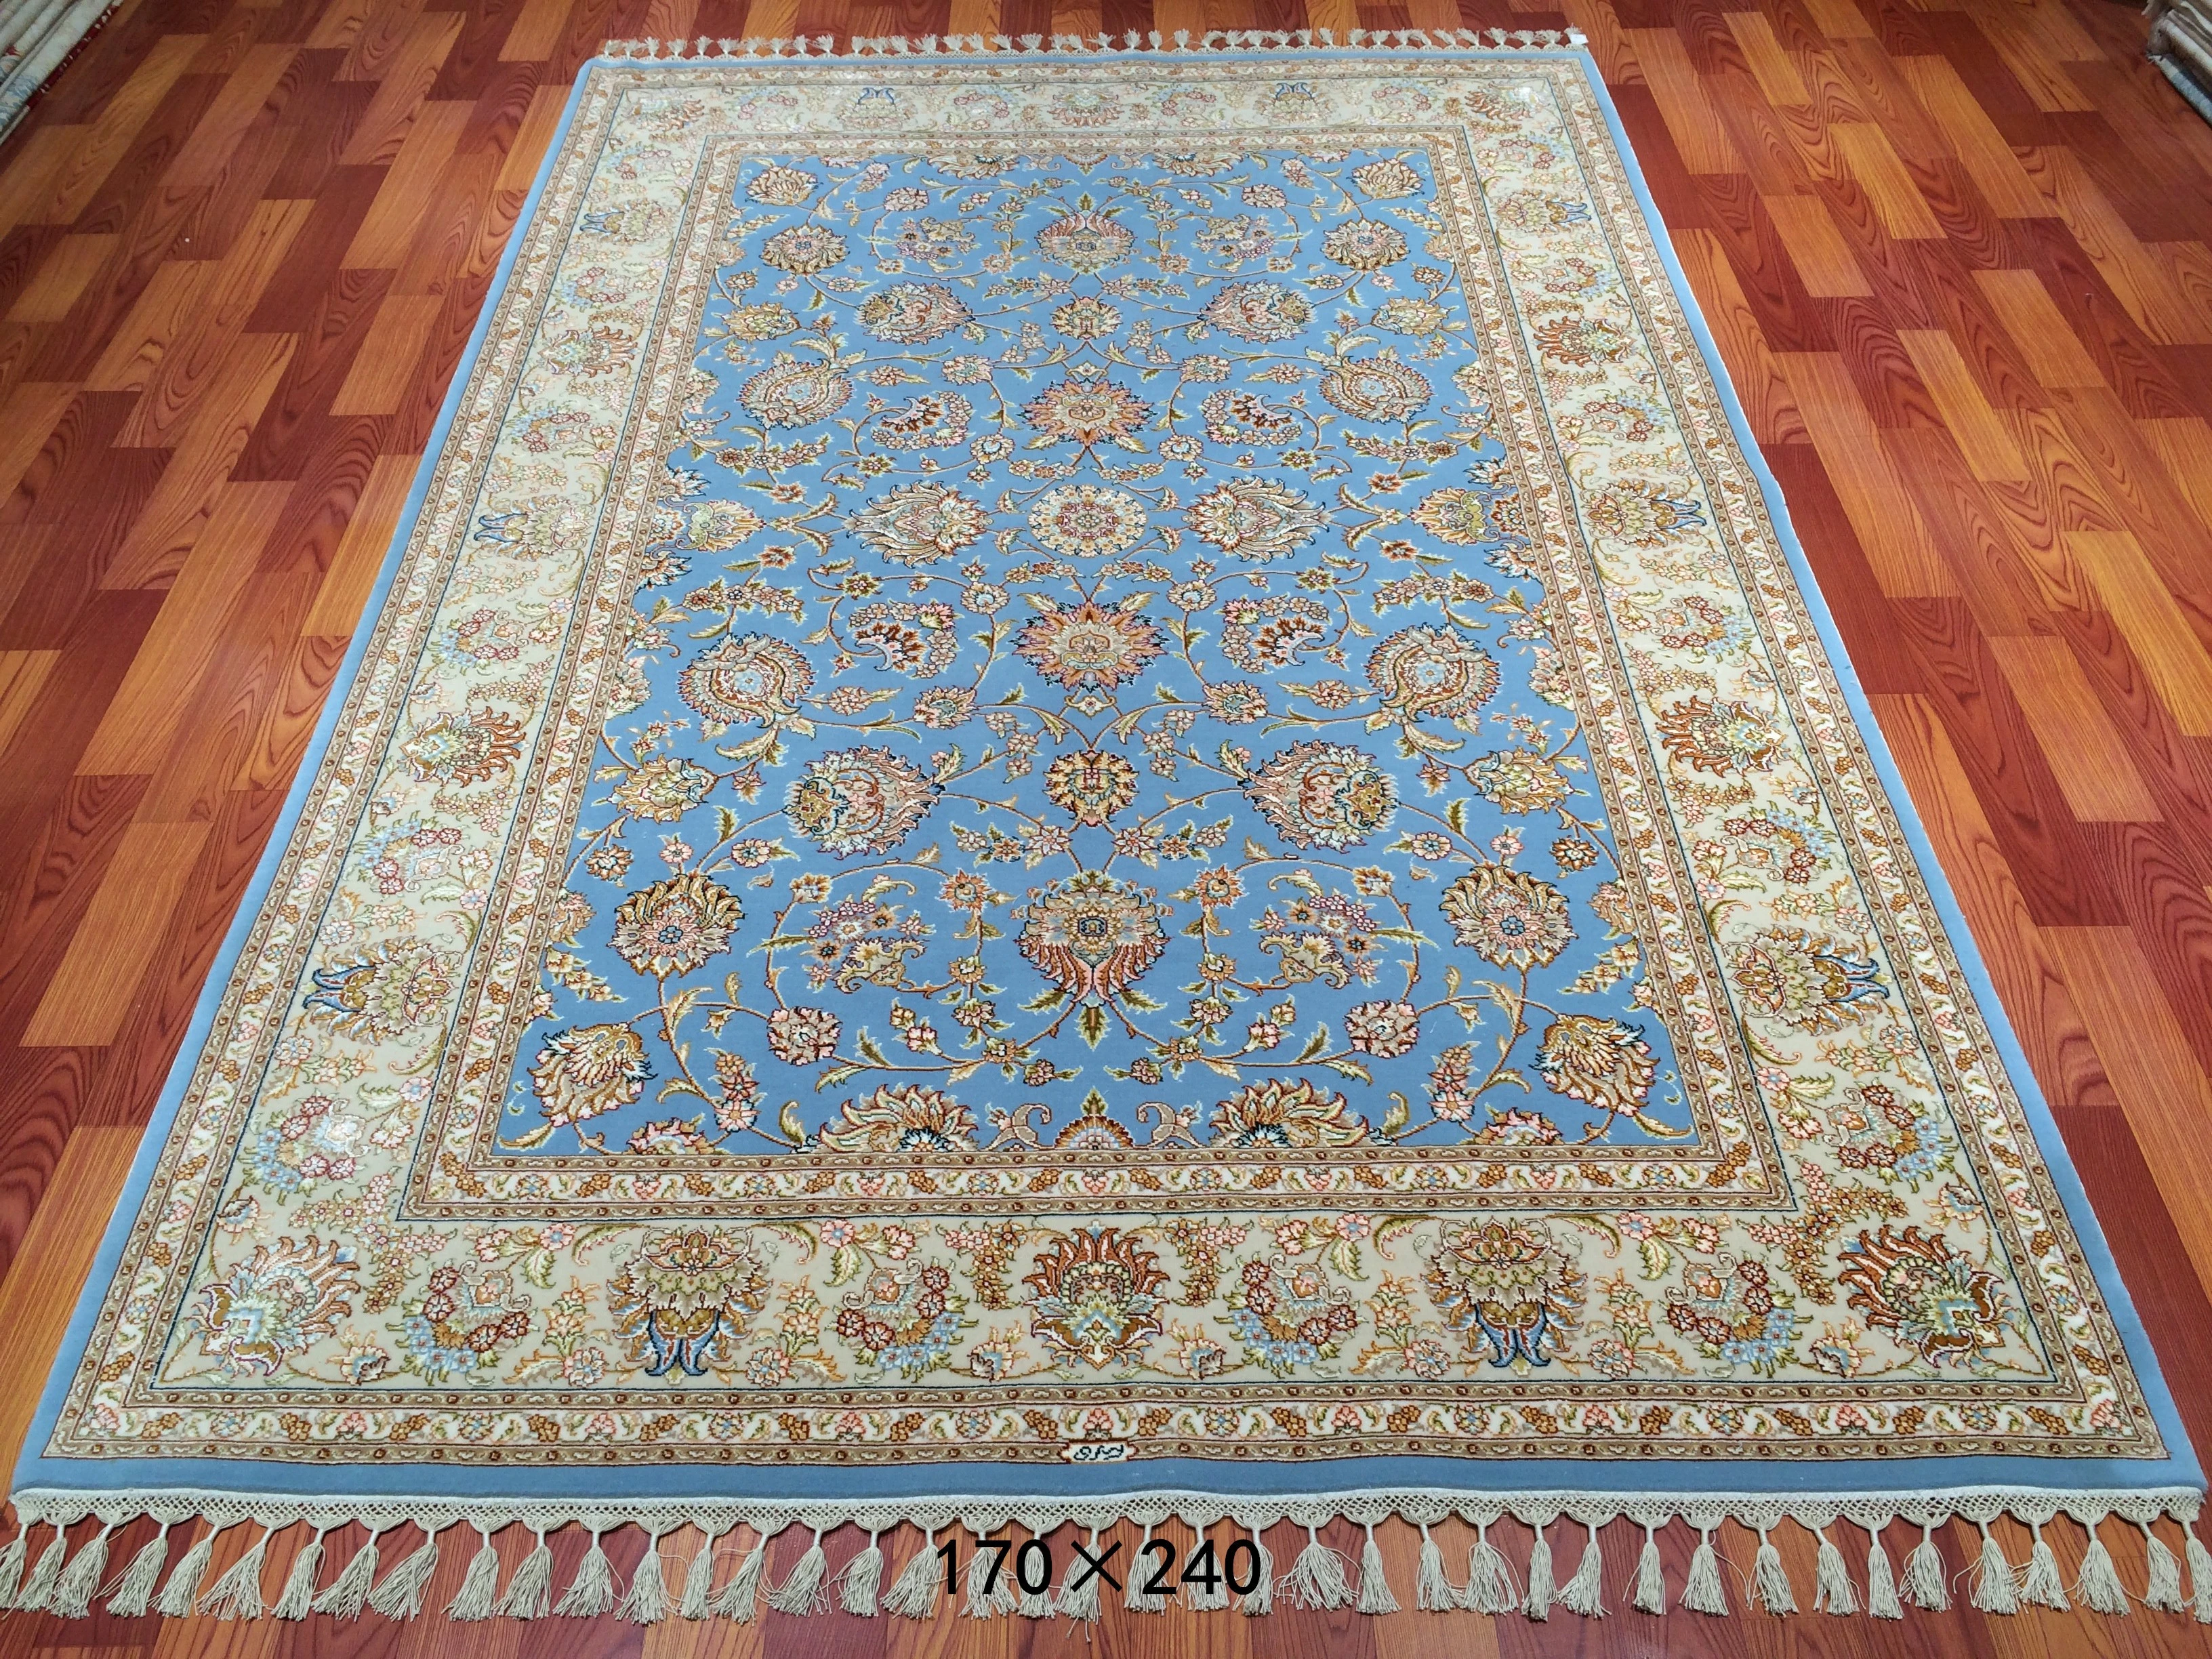 170x240cm nice sky blue Handmade plain tufted wool silk rugs wool mixed indoor living room area turkish karpets carpets rugs